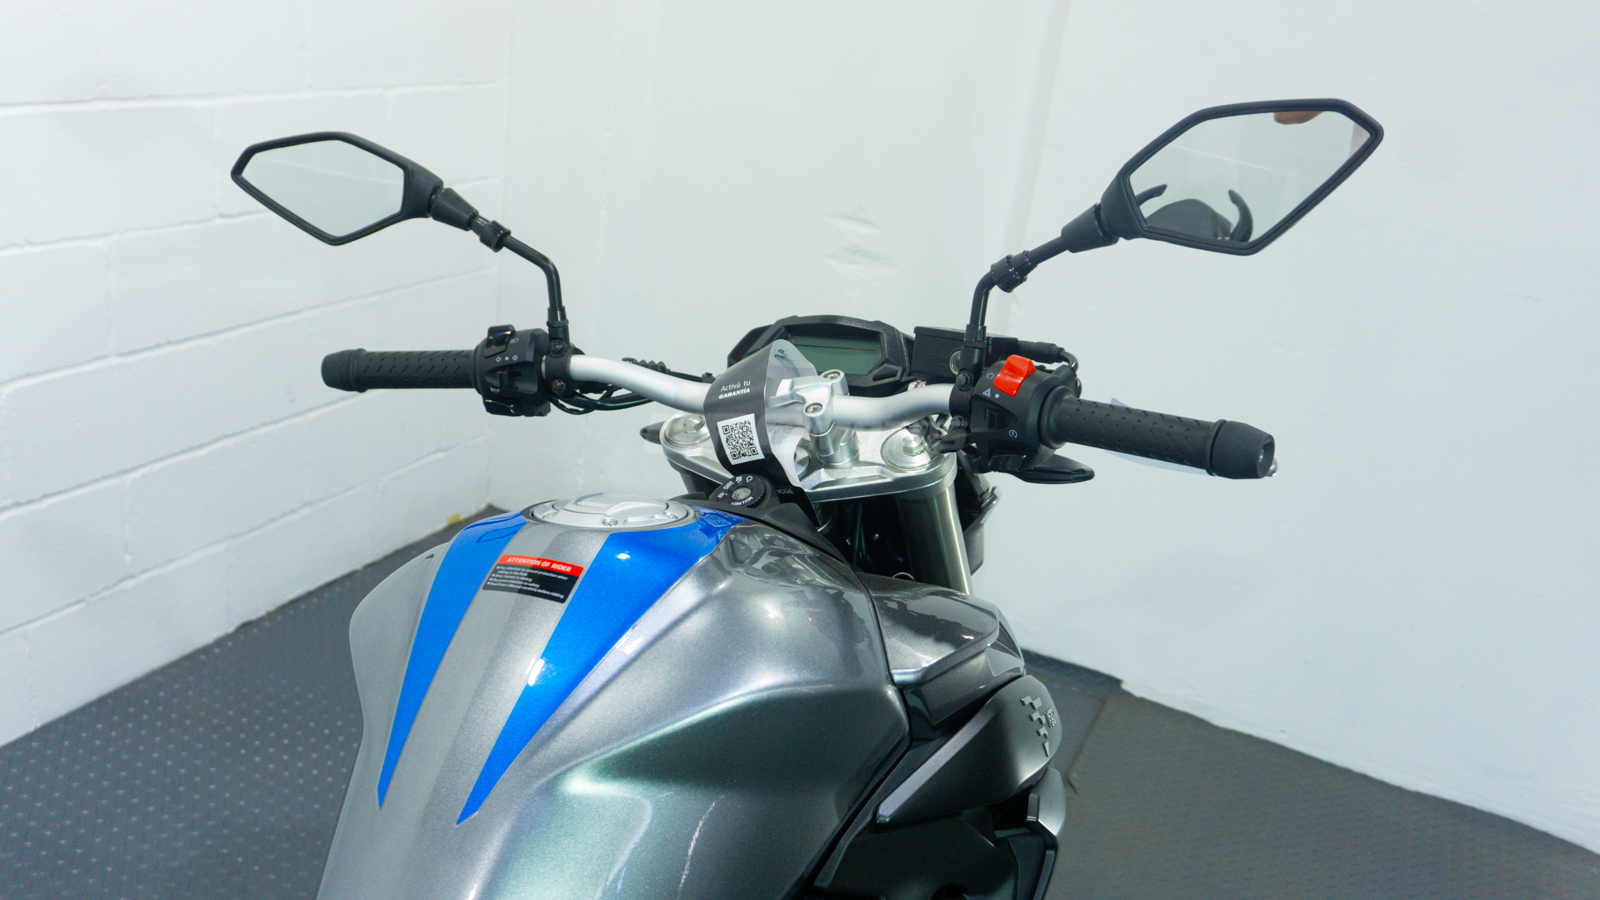 Moto Voge 500 R